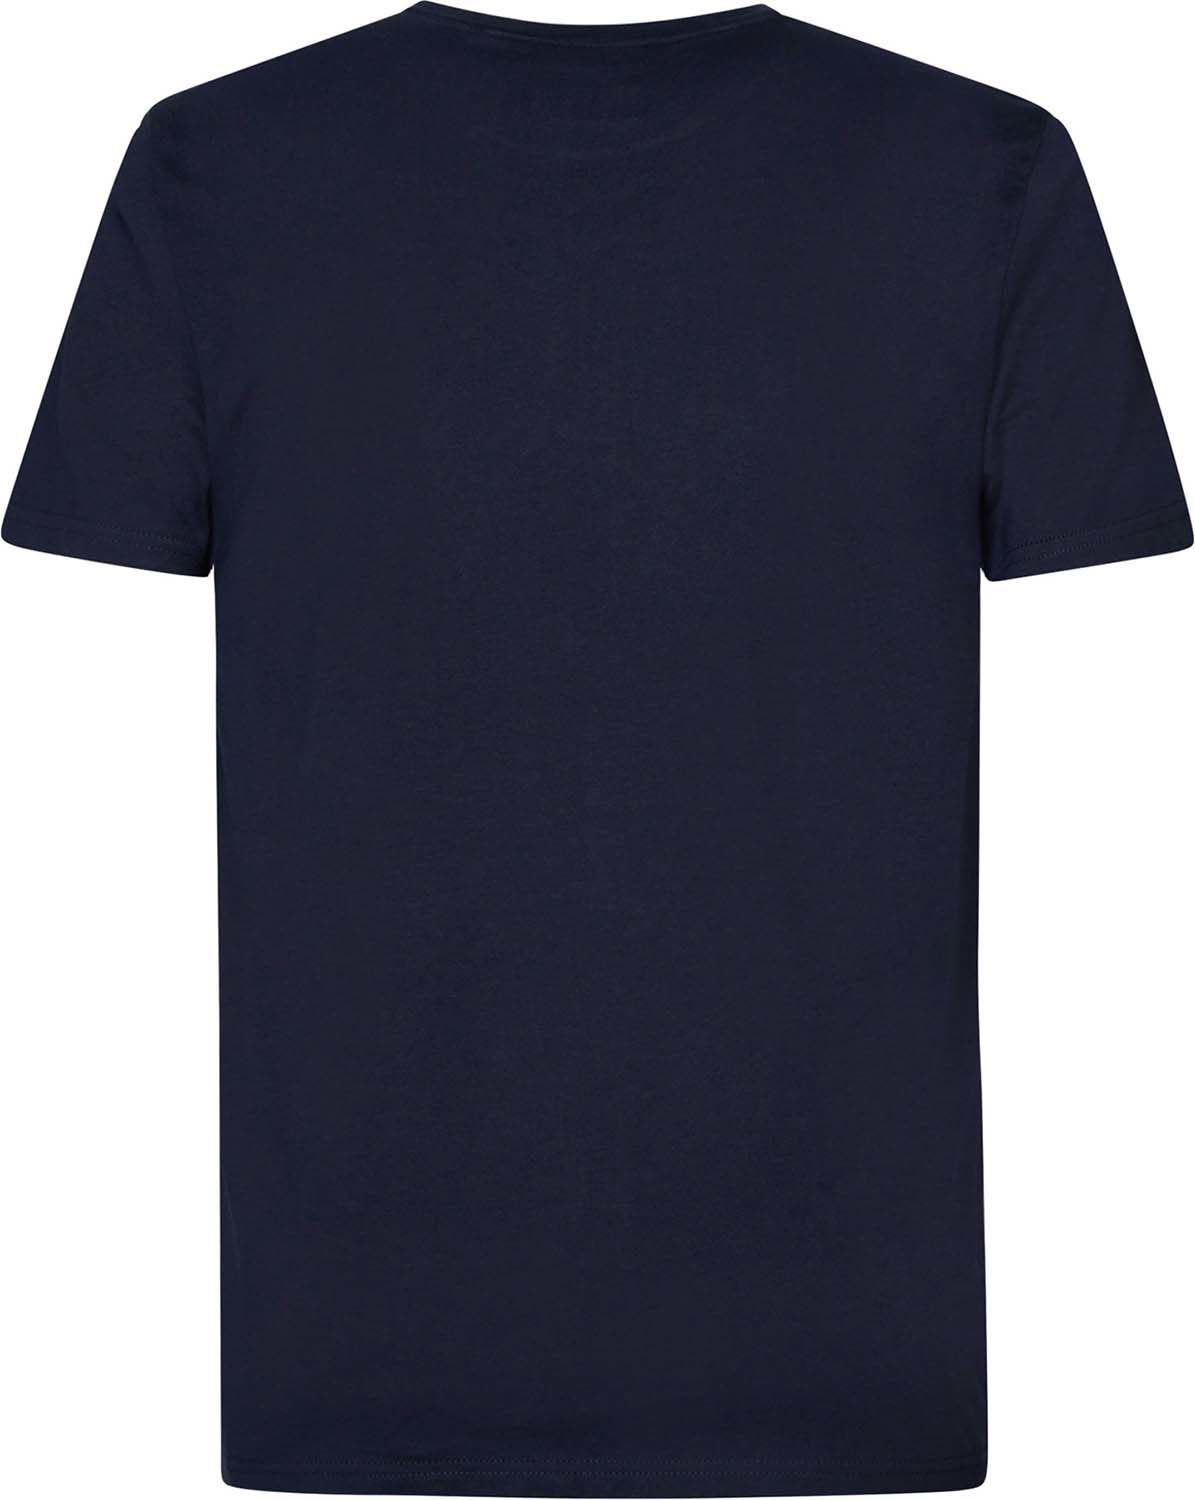 Petrol T-shirt Donkerblauw 